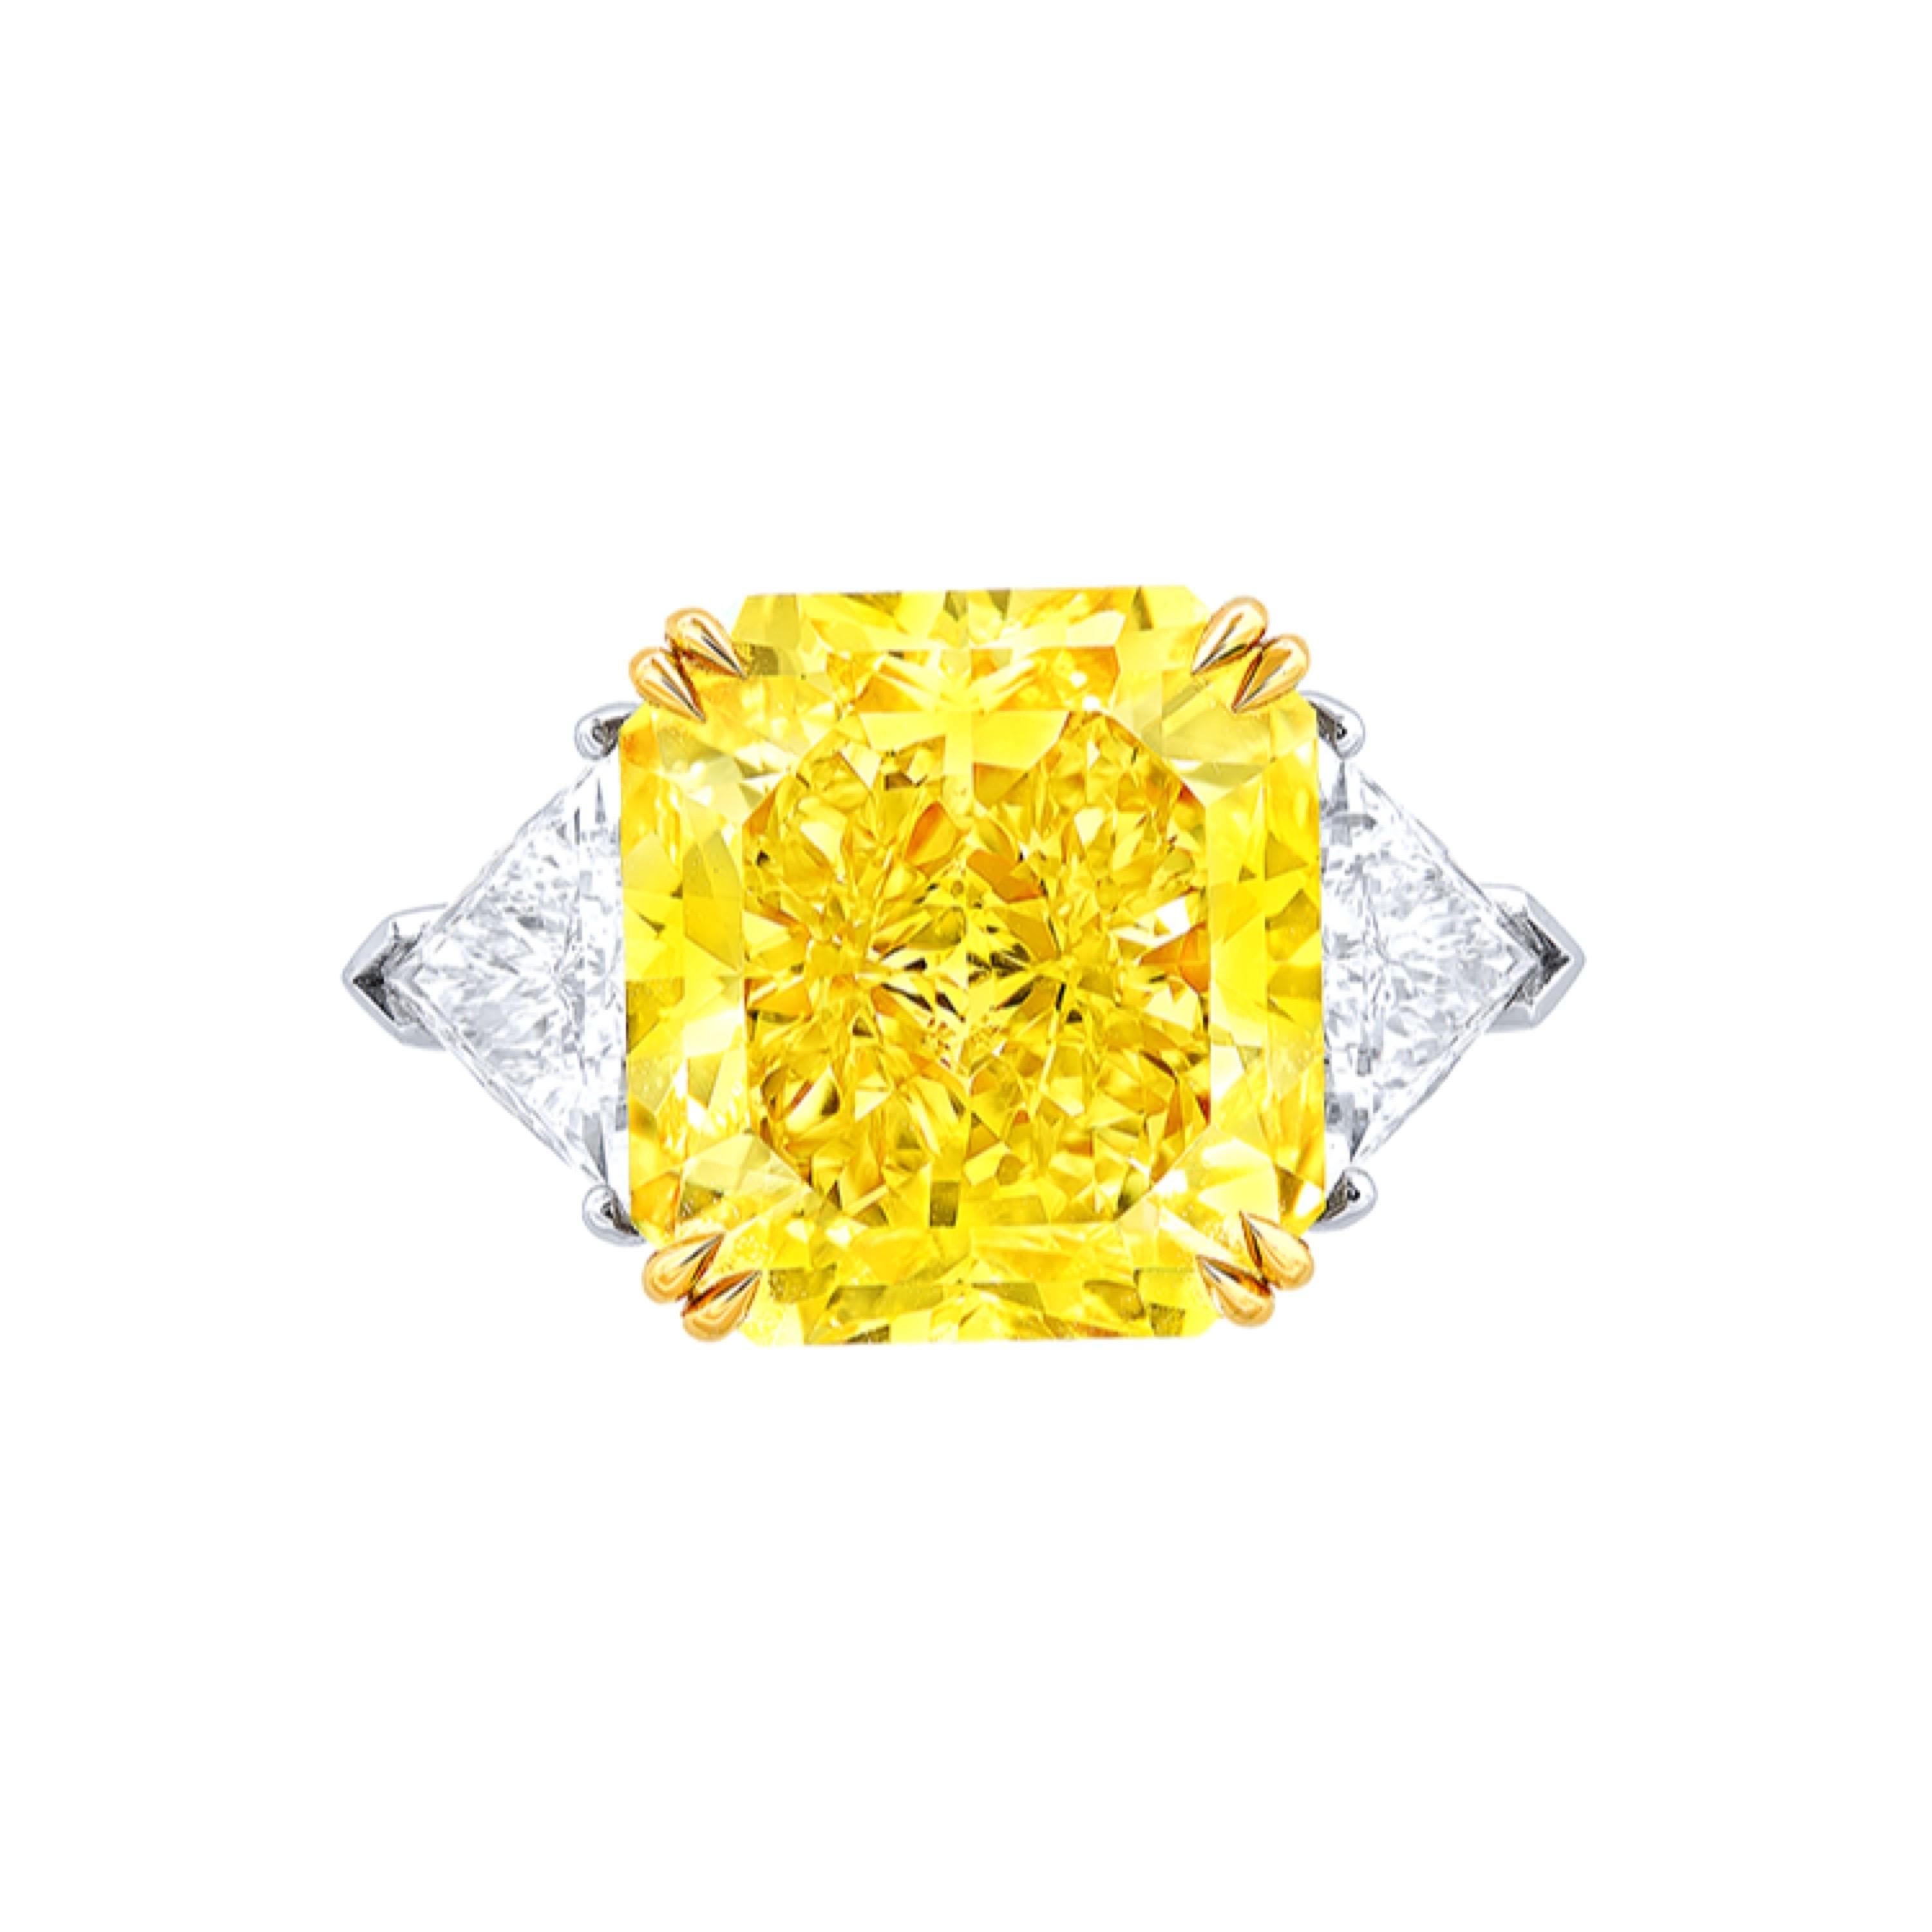 Radiant Cut Emilio Jewelry GIA Certified 14.00 Carat Fancy Intense Yellow Diamond Ring